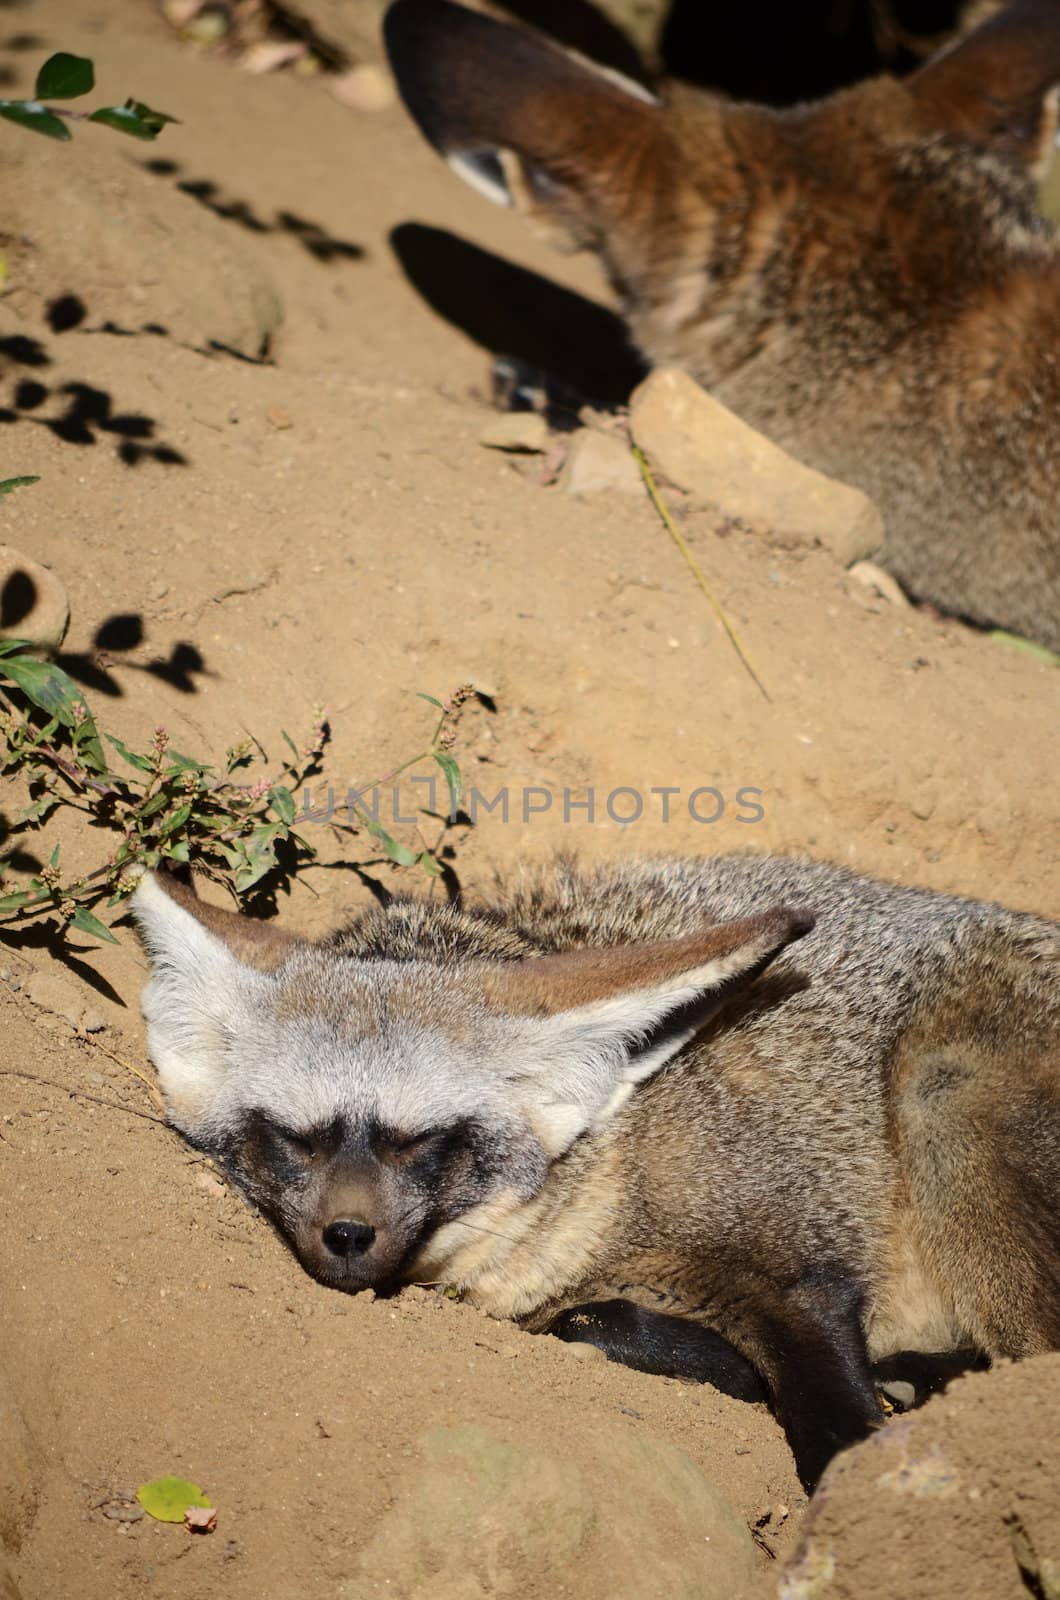 Bat-eared fox by sarkao